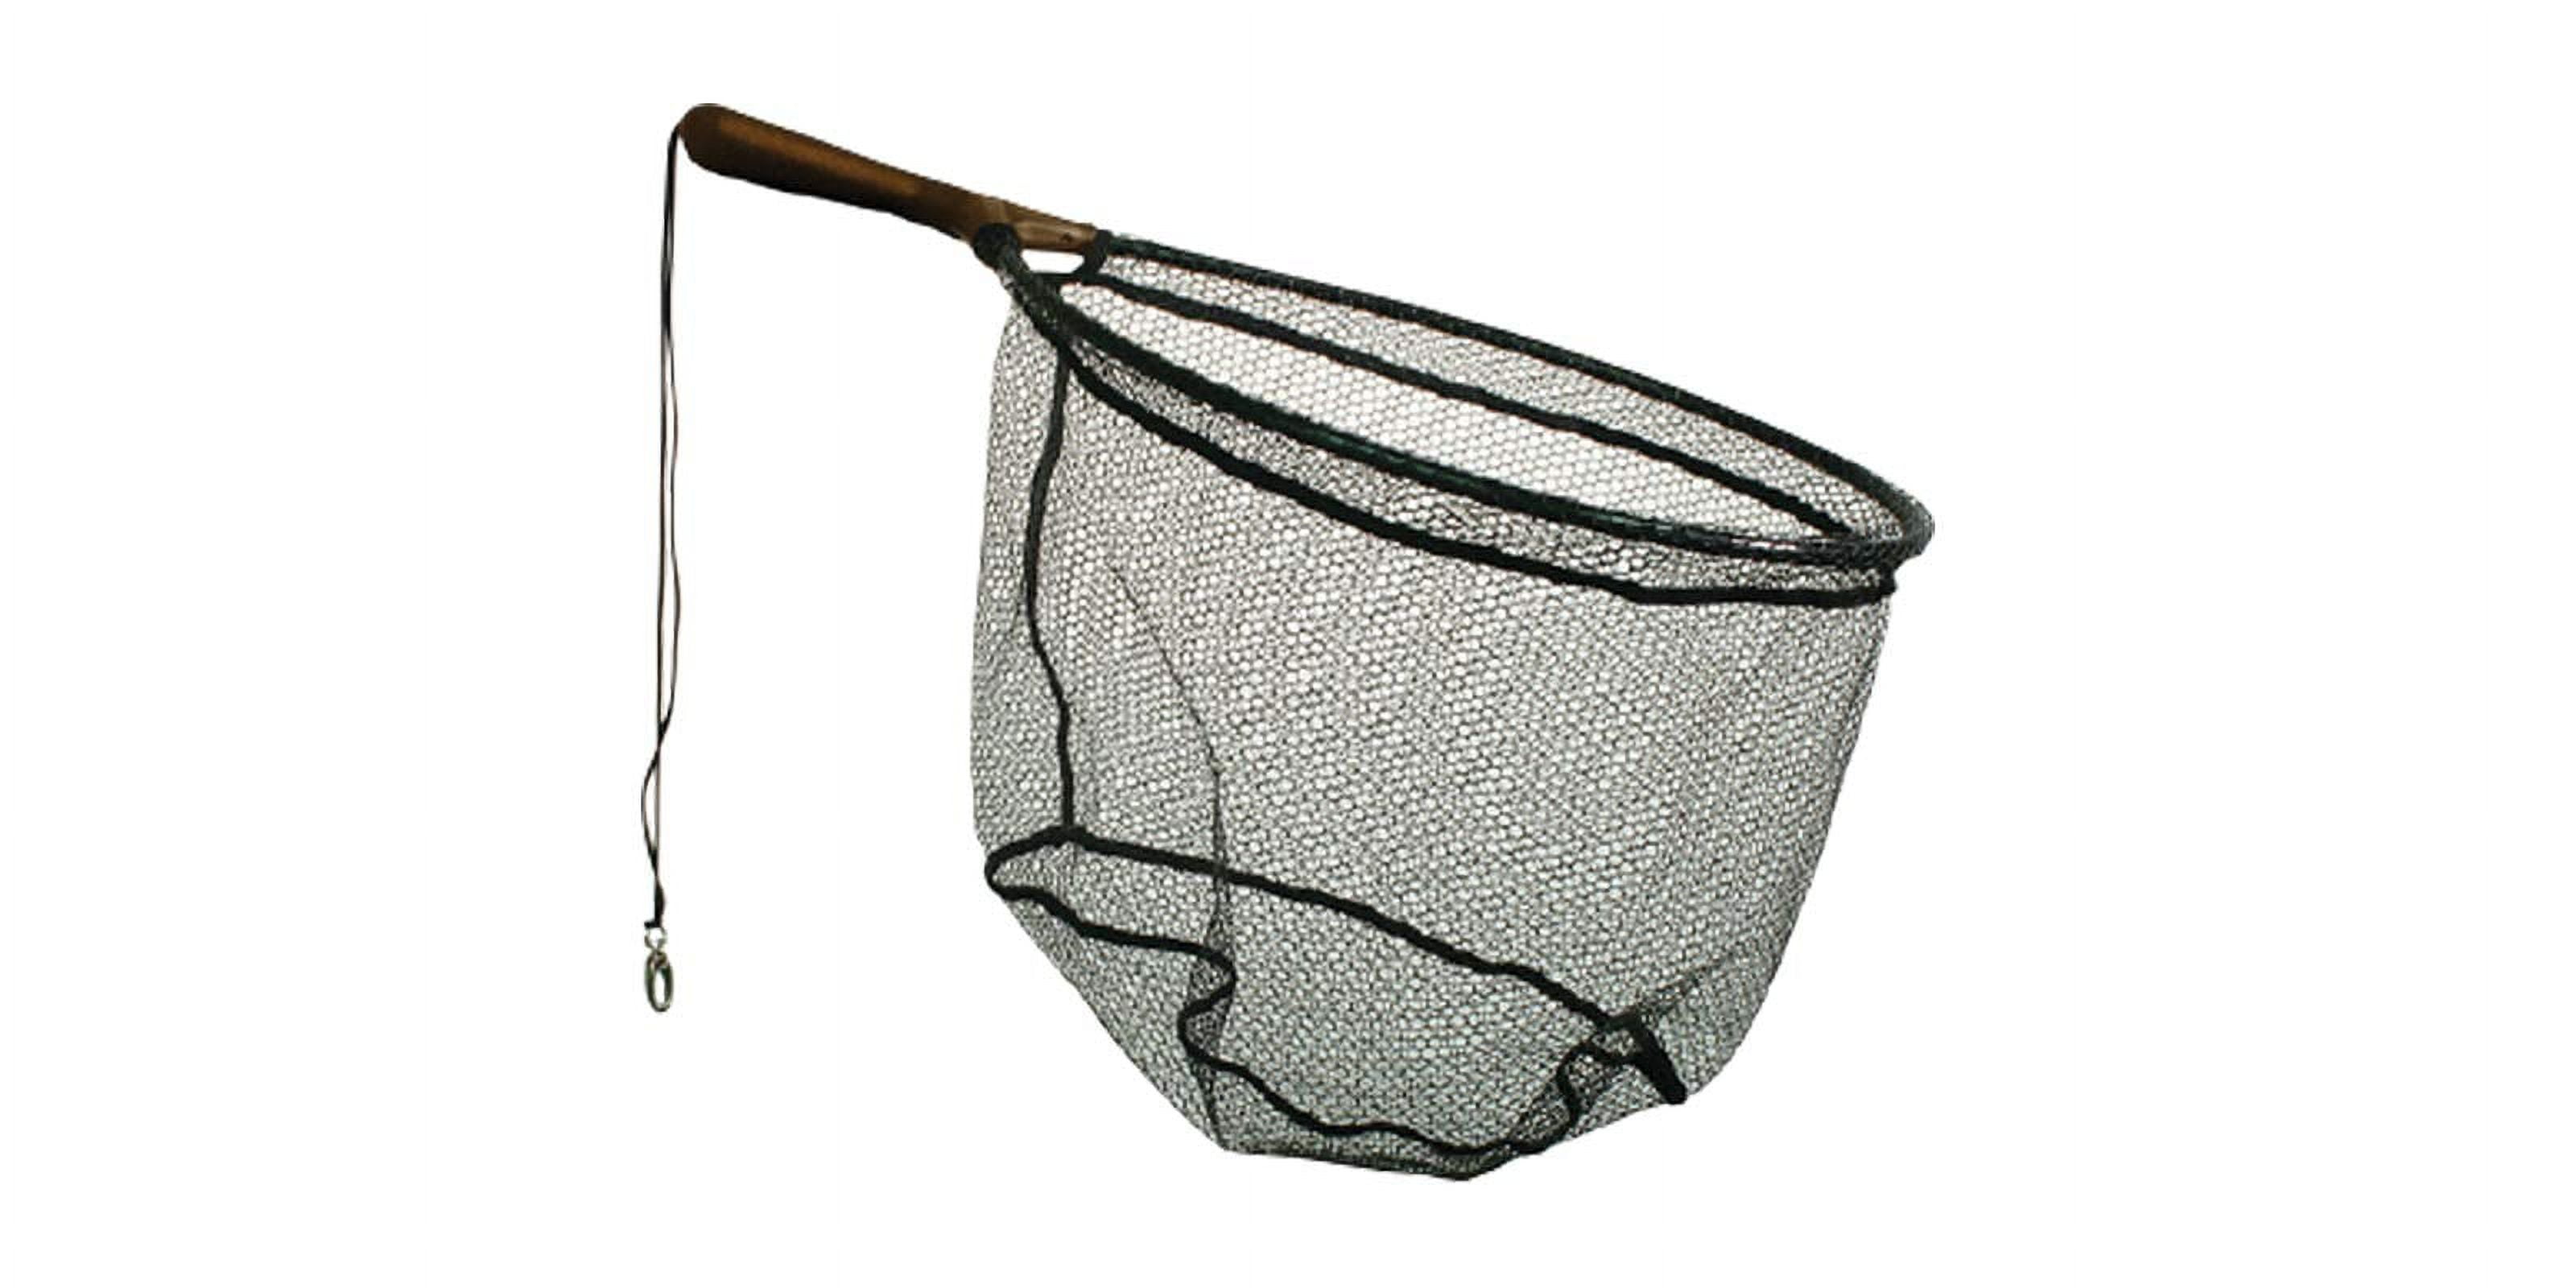 Wooden Handle Wade Net, Frabill Fishing Suit